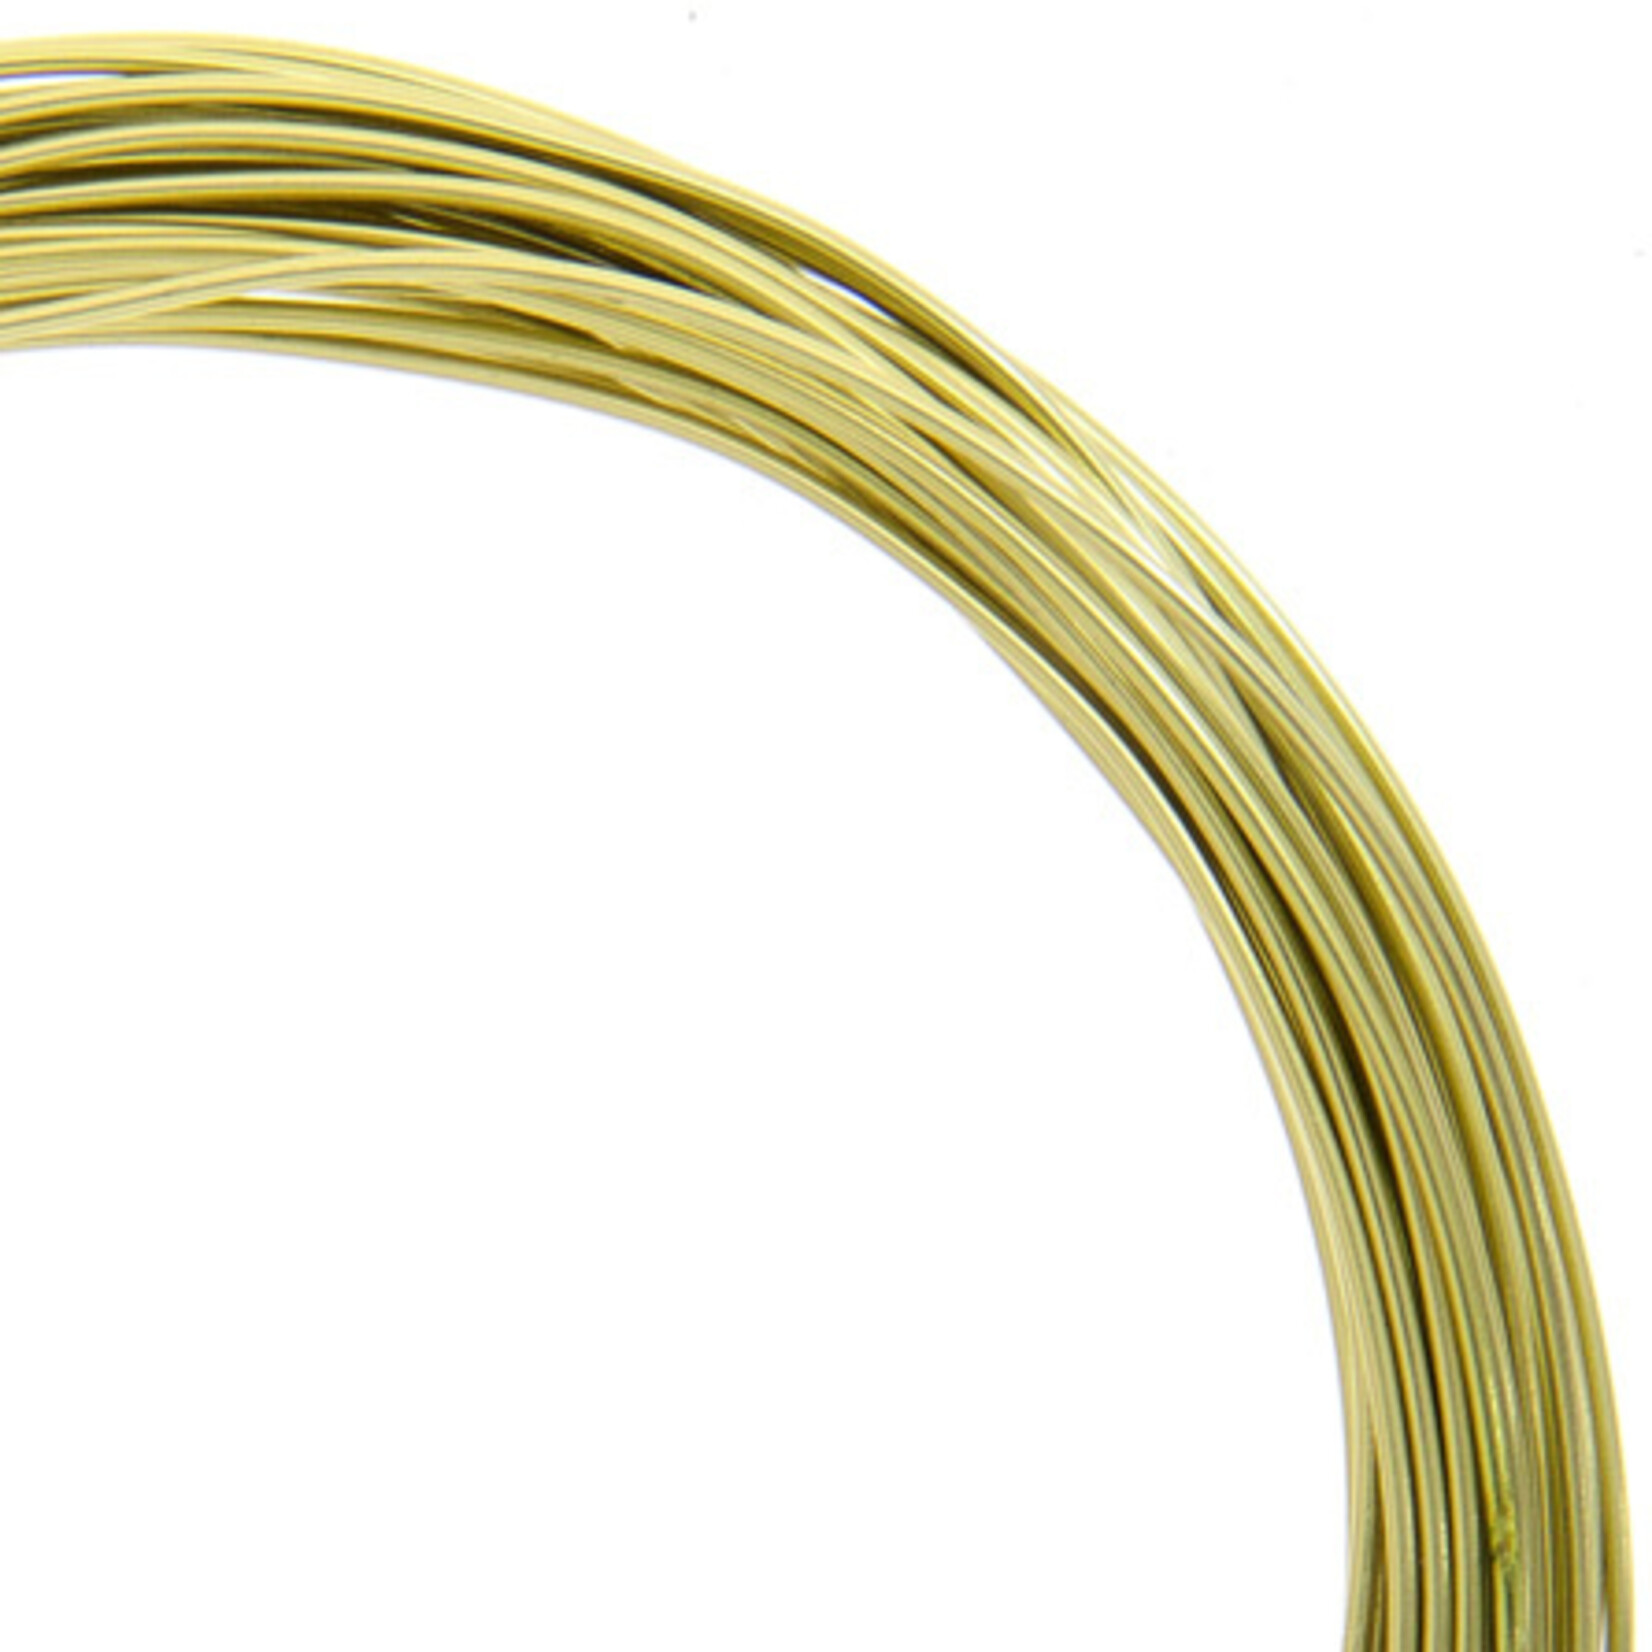 Aluminum Jewelry Wire 30 feet 18 Guage (1.2mm)